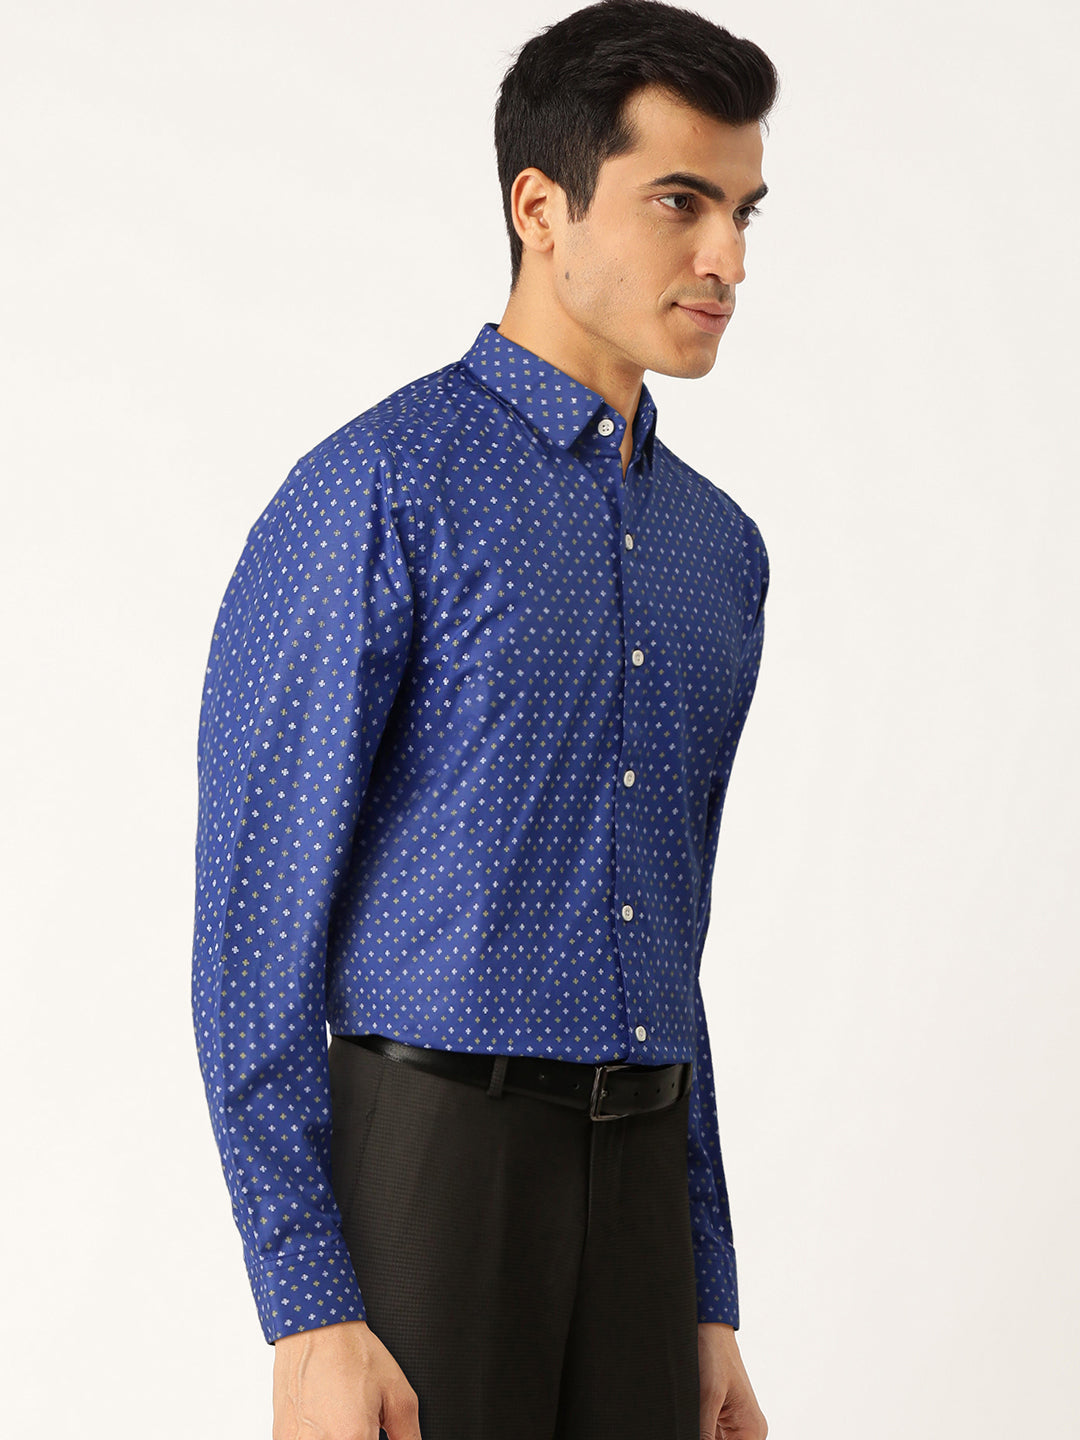 Men's Blue Cotton Printed Formal Shirts ( SF 716Blue ) - Jainish